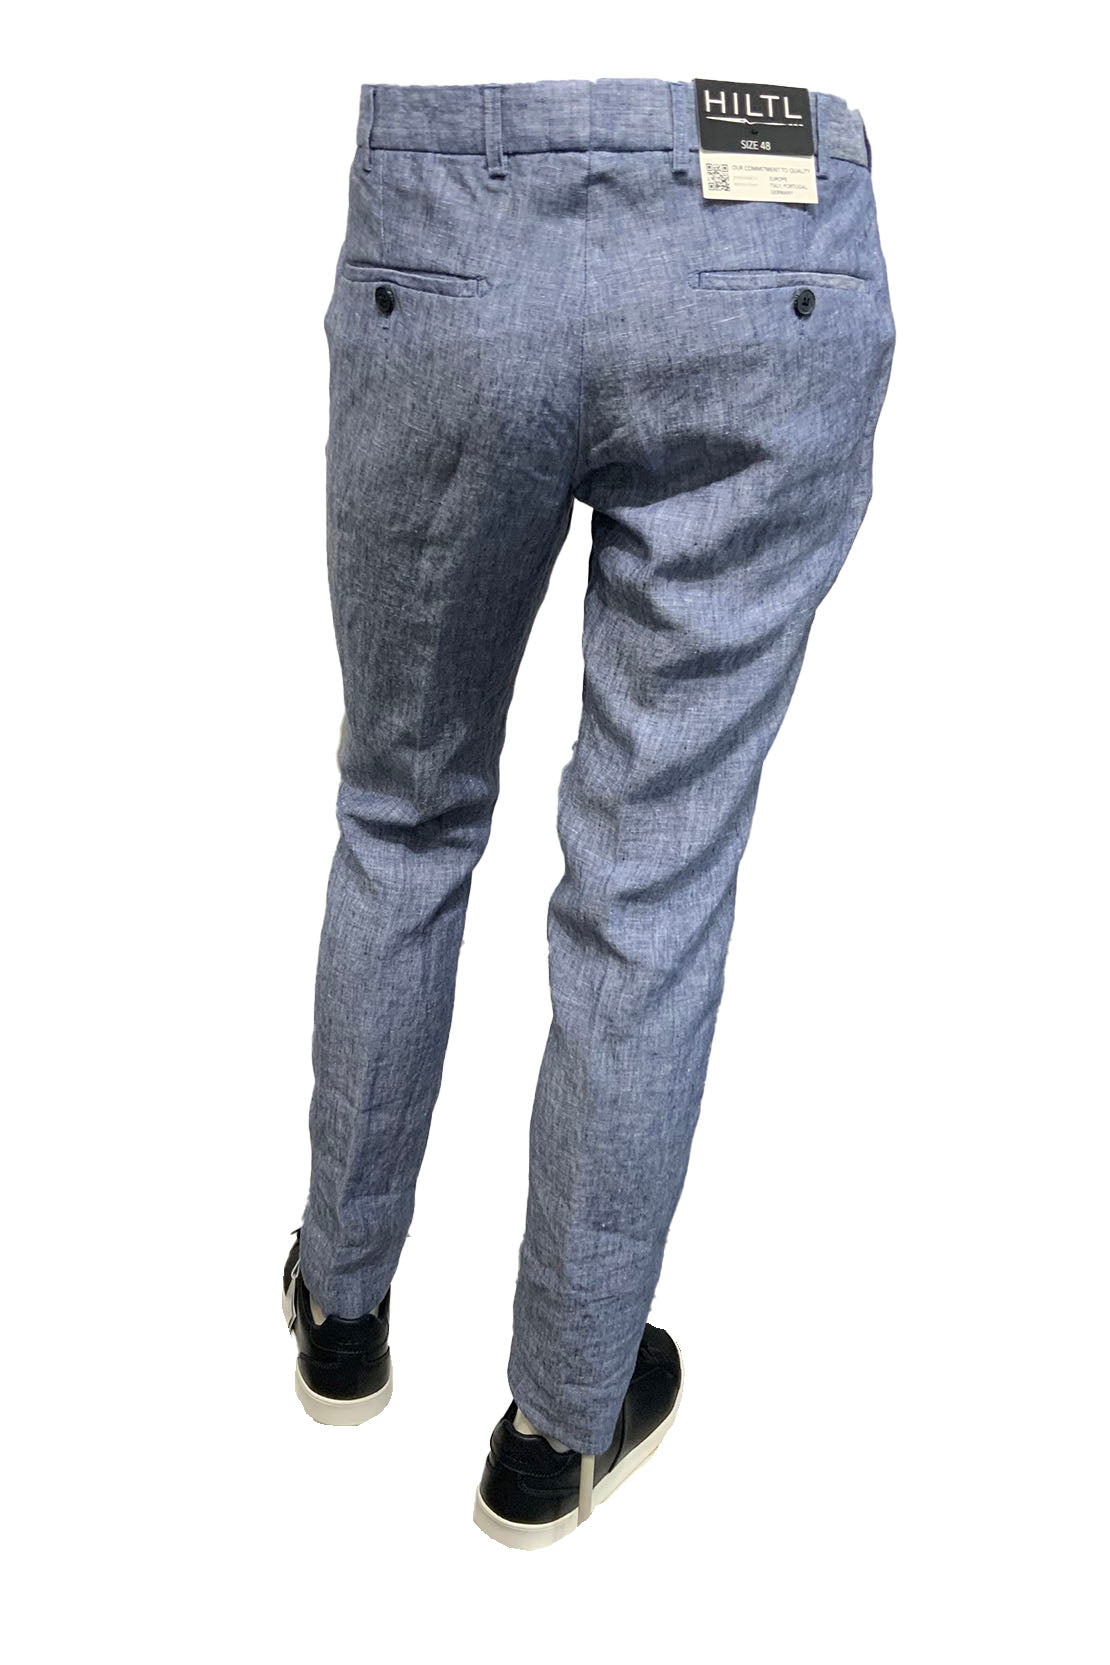 HILTL - TARENT Slim Fit Linen Trousers in Light Blue 53355/53600 46